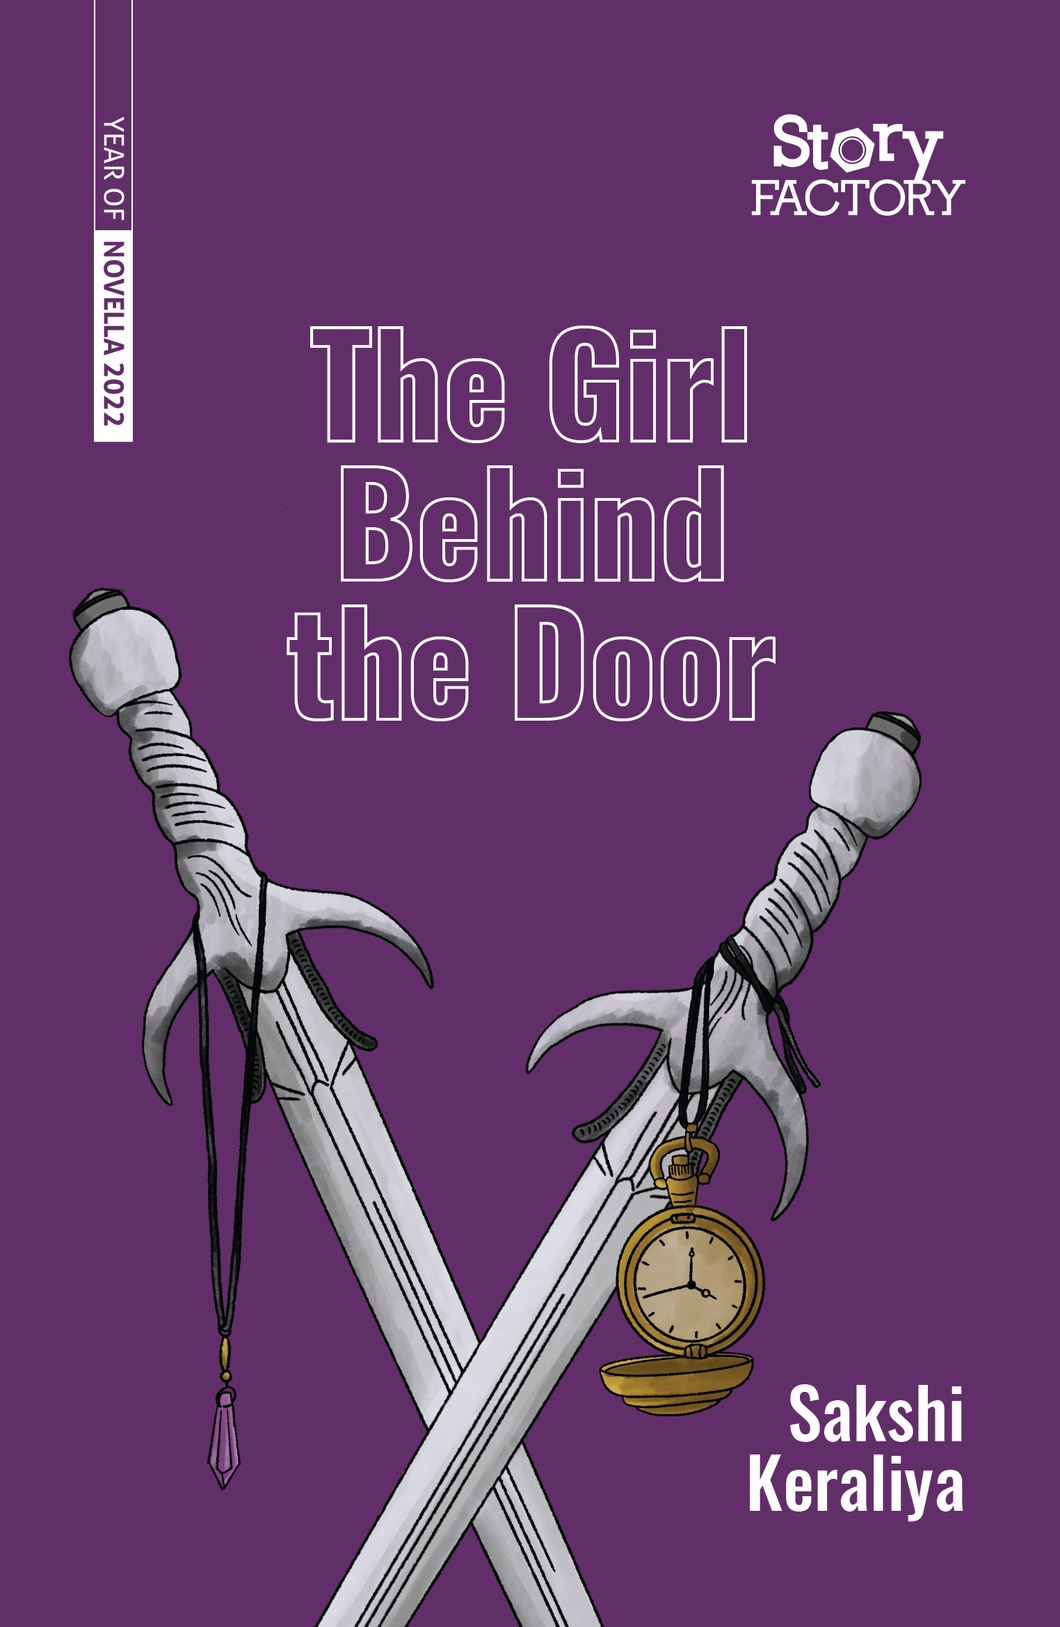 The Girl Behind the Door by Sakshi Keraliya